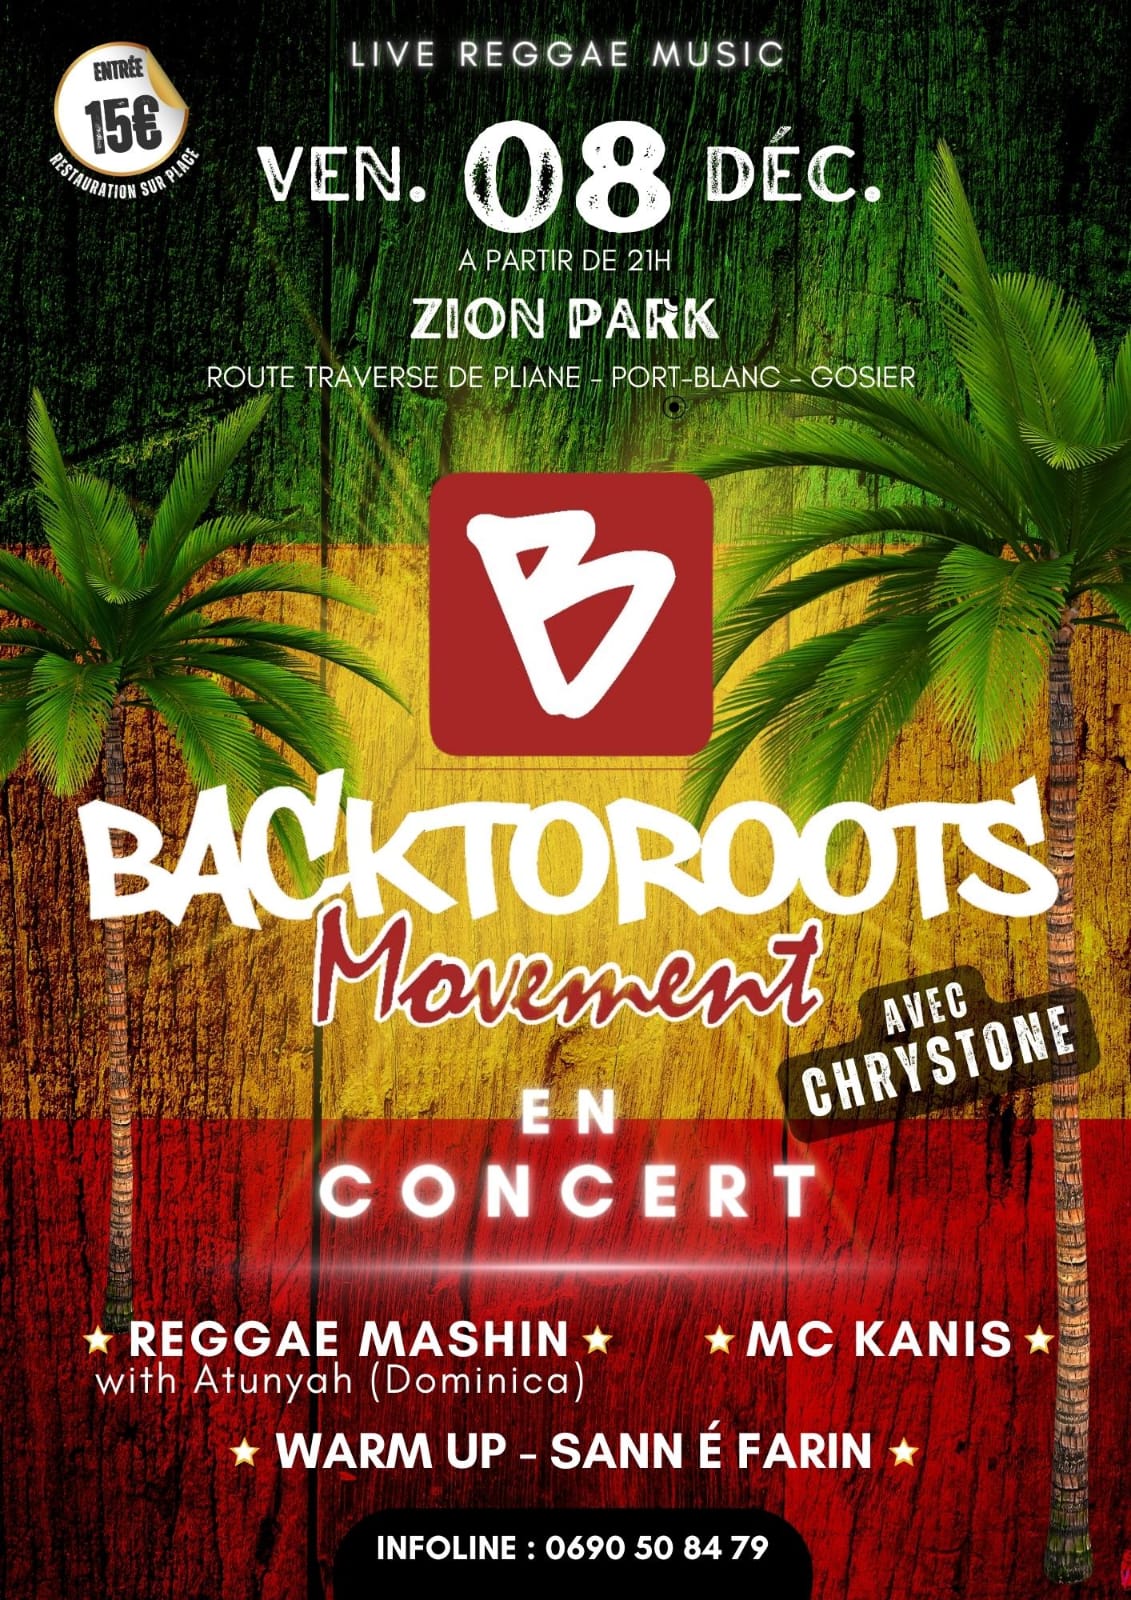 Backtoroots Movement en concert / Reggae Mashin/Mc Kanis/Sann é Farin